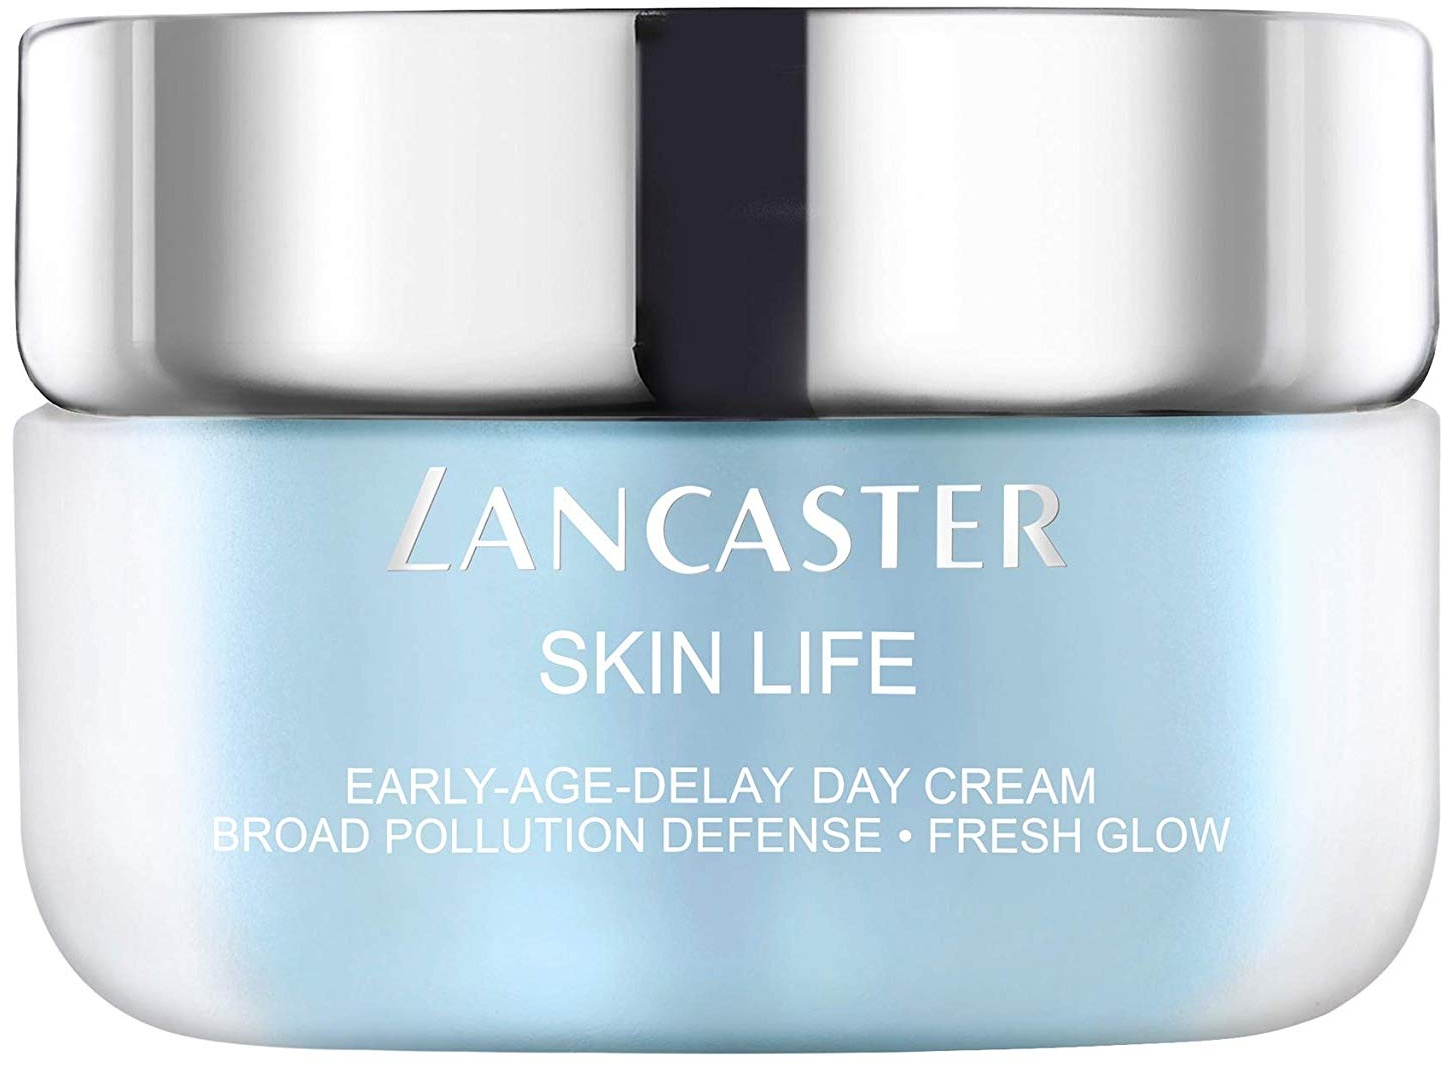 LANCASTER Skin Life Early-Age-Delay Day Cream, Anti Aging Tagescreme für Frauen von 25 – 35, Sorbet Gel Creme, 50ml